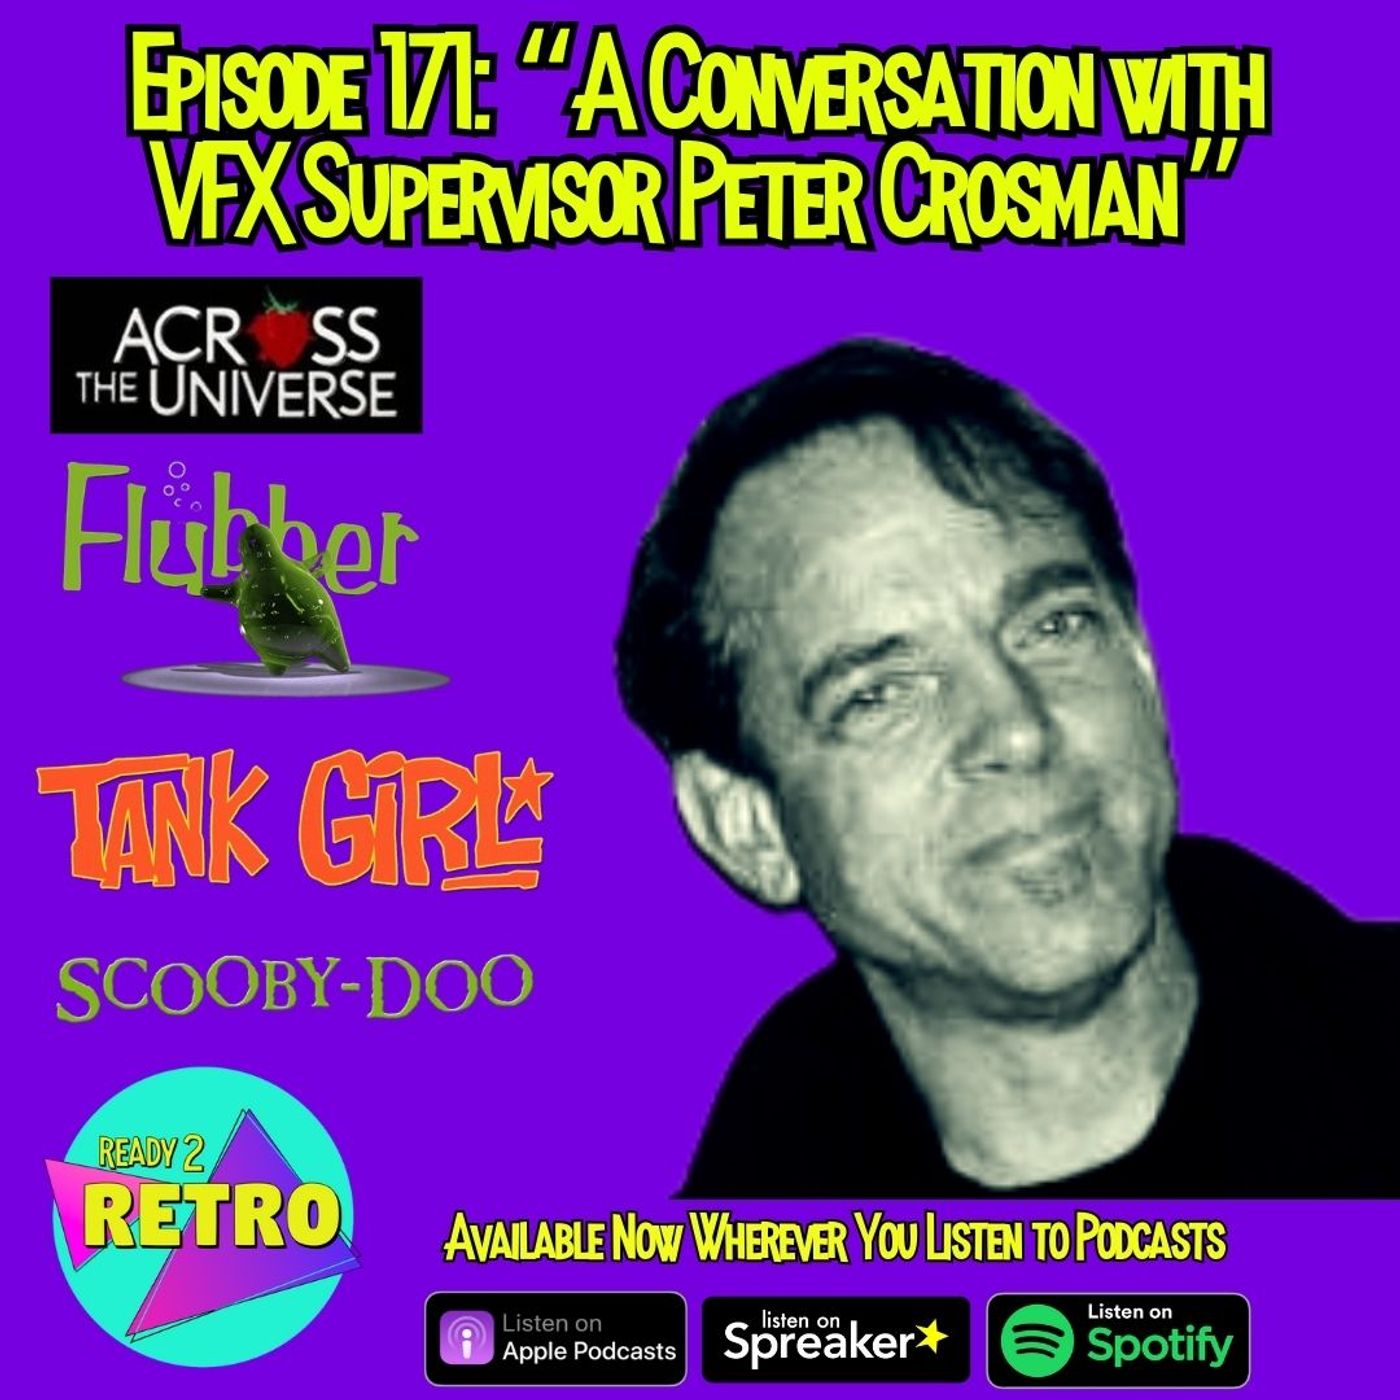 Episode 171" "A Conversation with VFX Supervisor Peter Crosman"